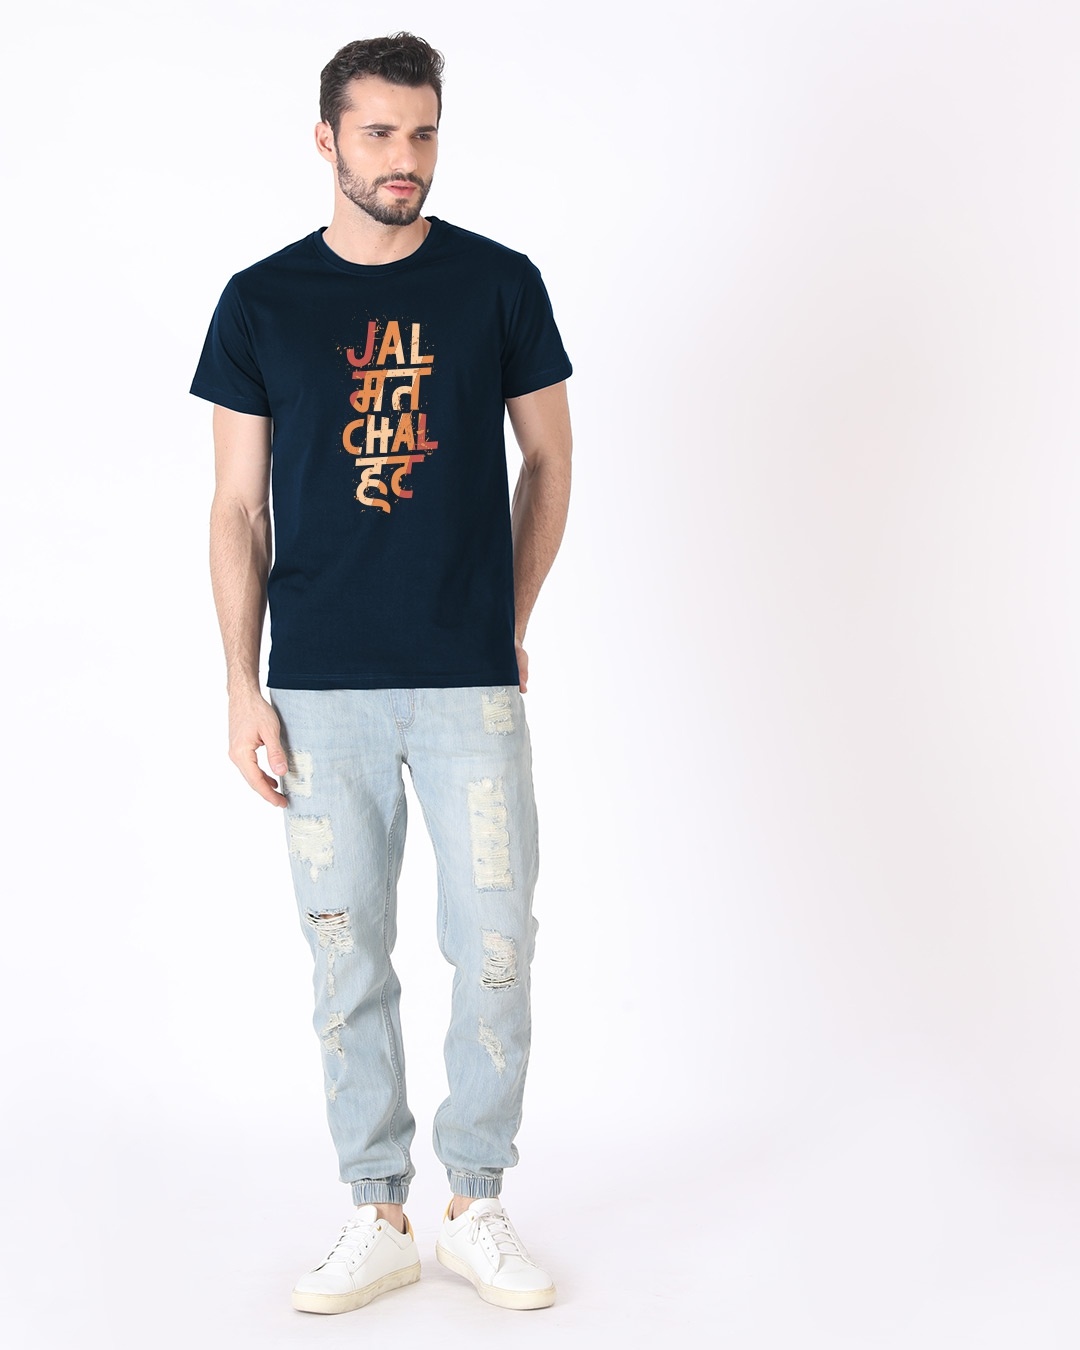 Shop Jal Mat Chal Hat Half Sleeve T-Shirt